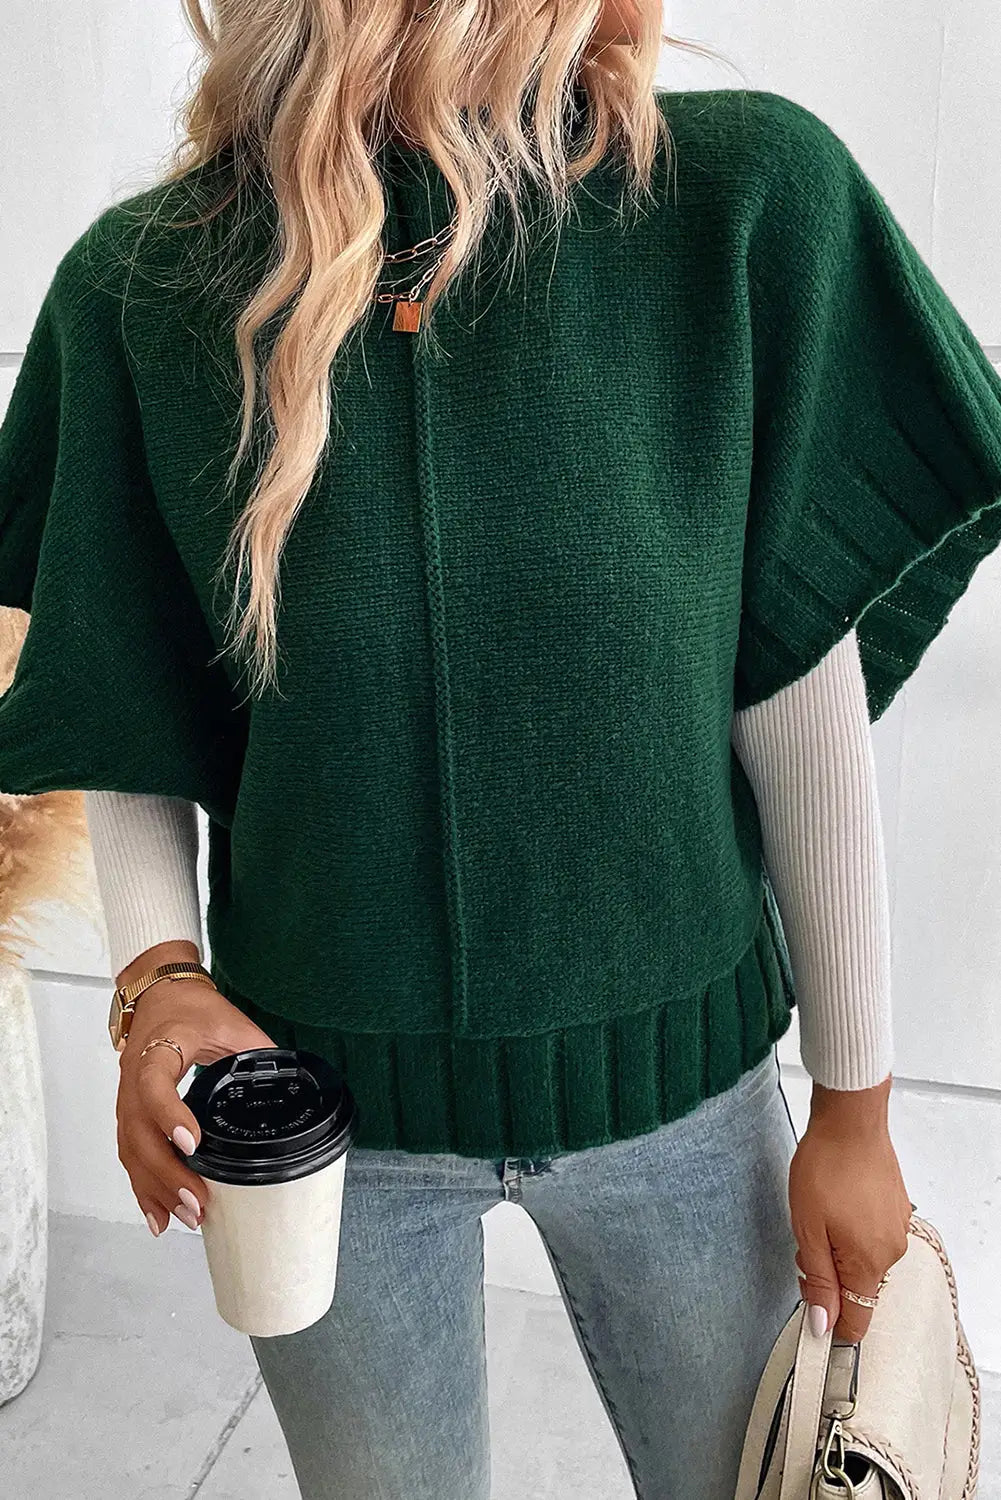 Blackish green mock neck batwing short sleeve knit sweater - sweaters & cardigans